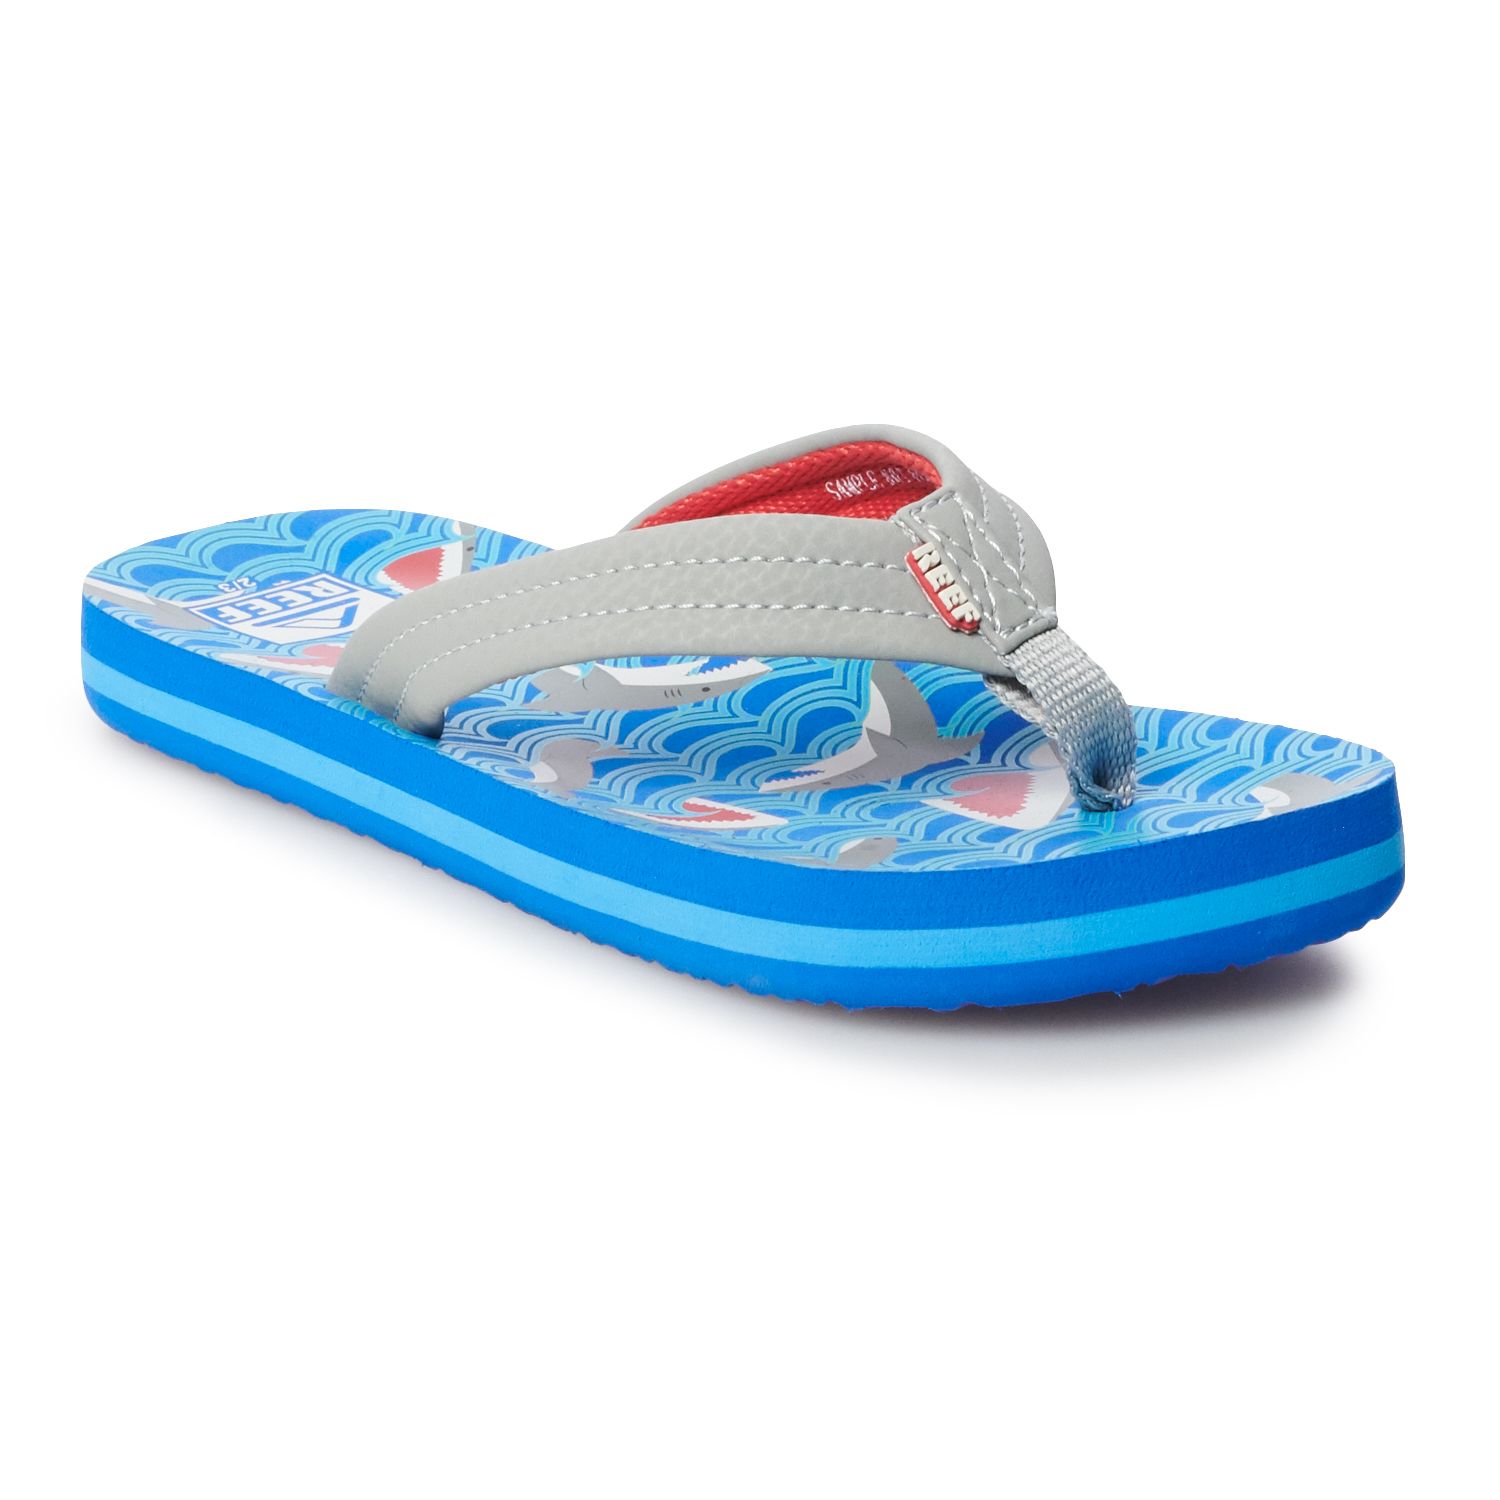 reef ahi slippers